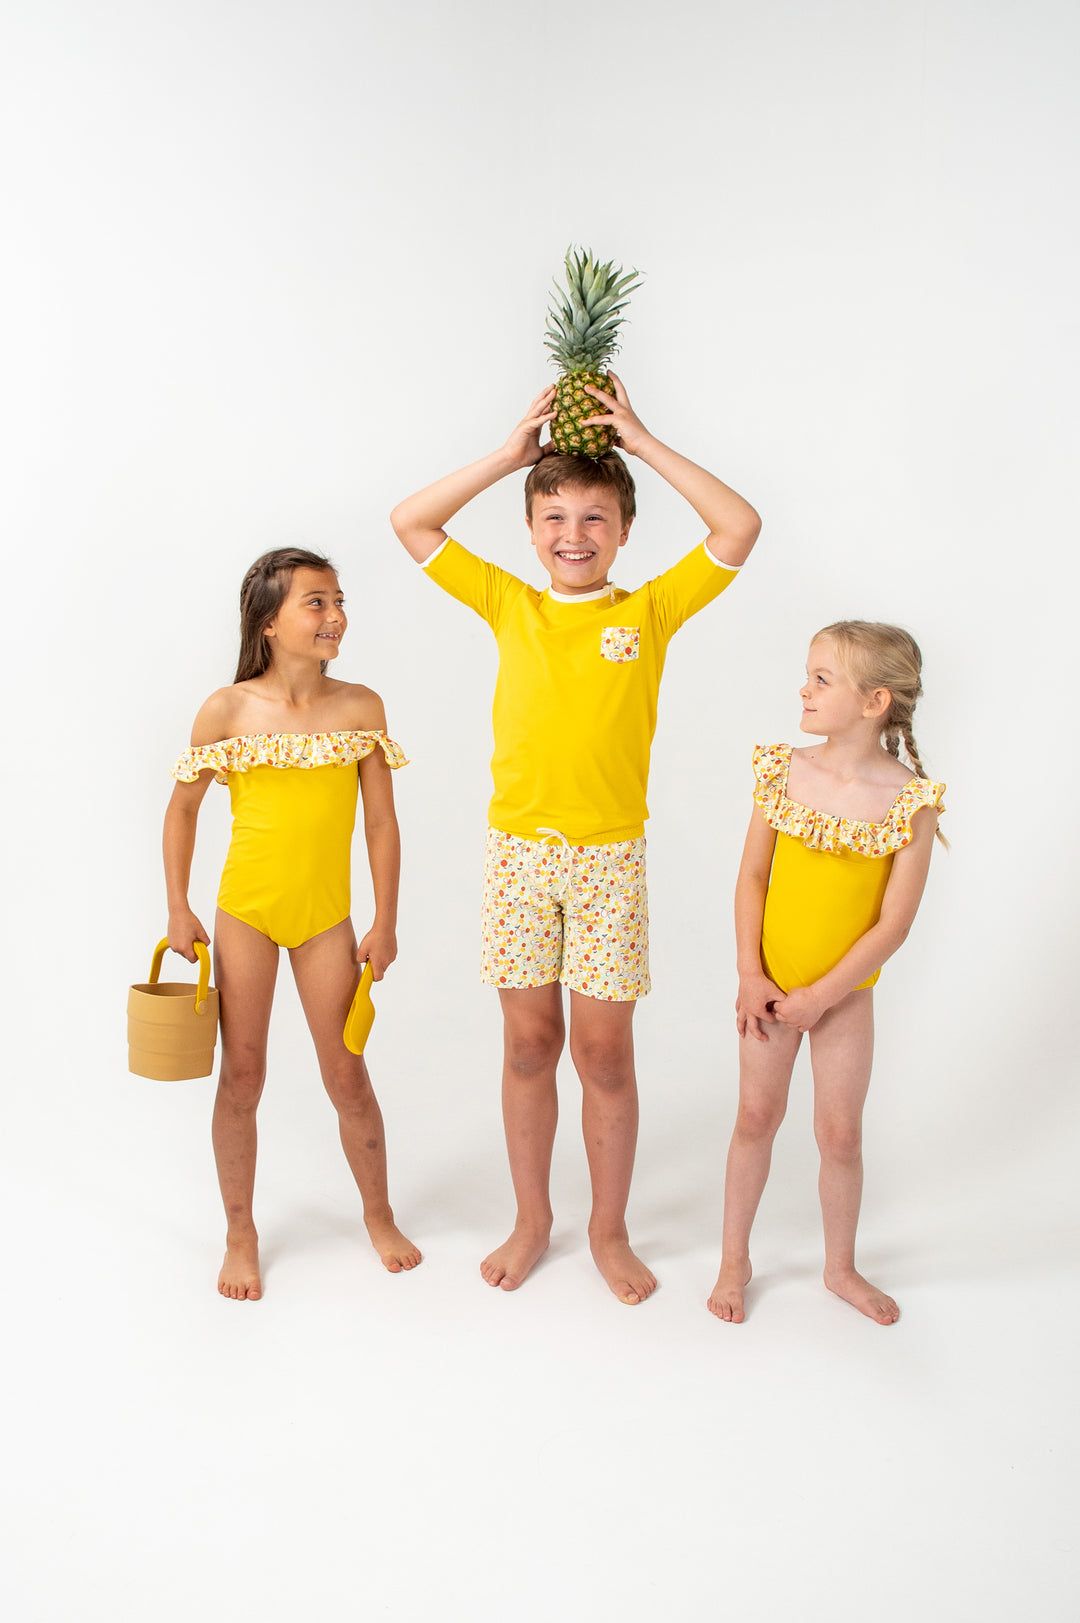 Swimshort TOMMASO Sicilian Lemon Print - ملابس السباحة